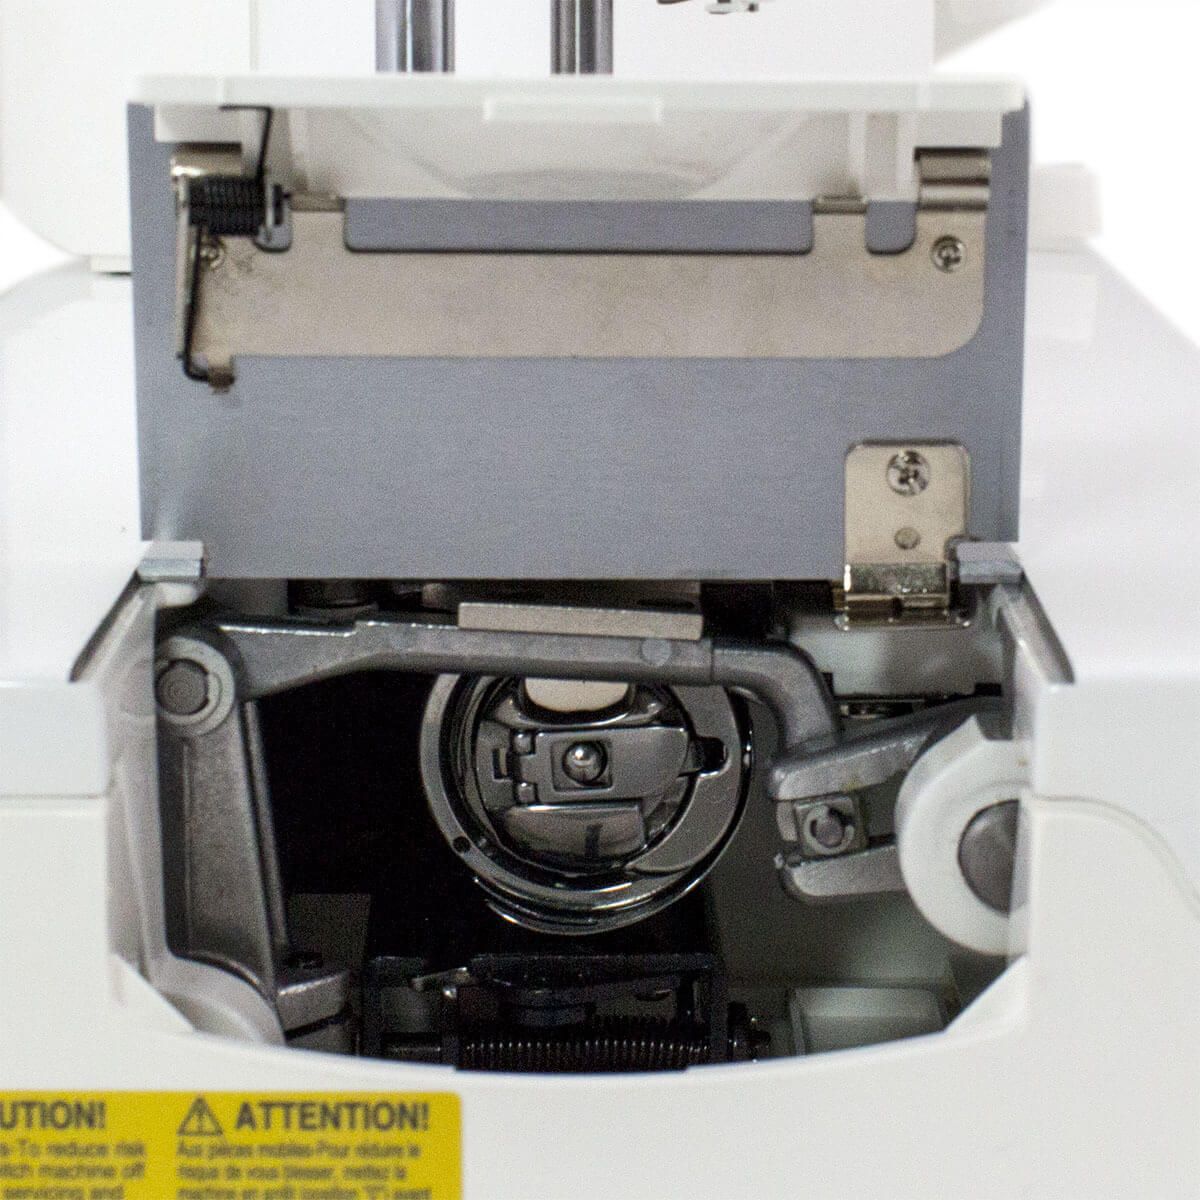 Juki TL-2000QI High Speed Sewing & Quilting Machine